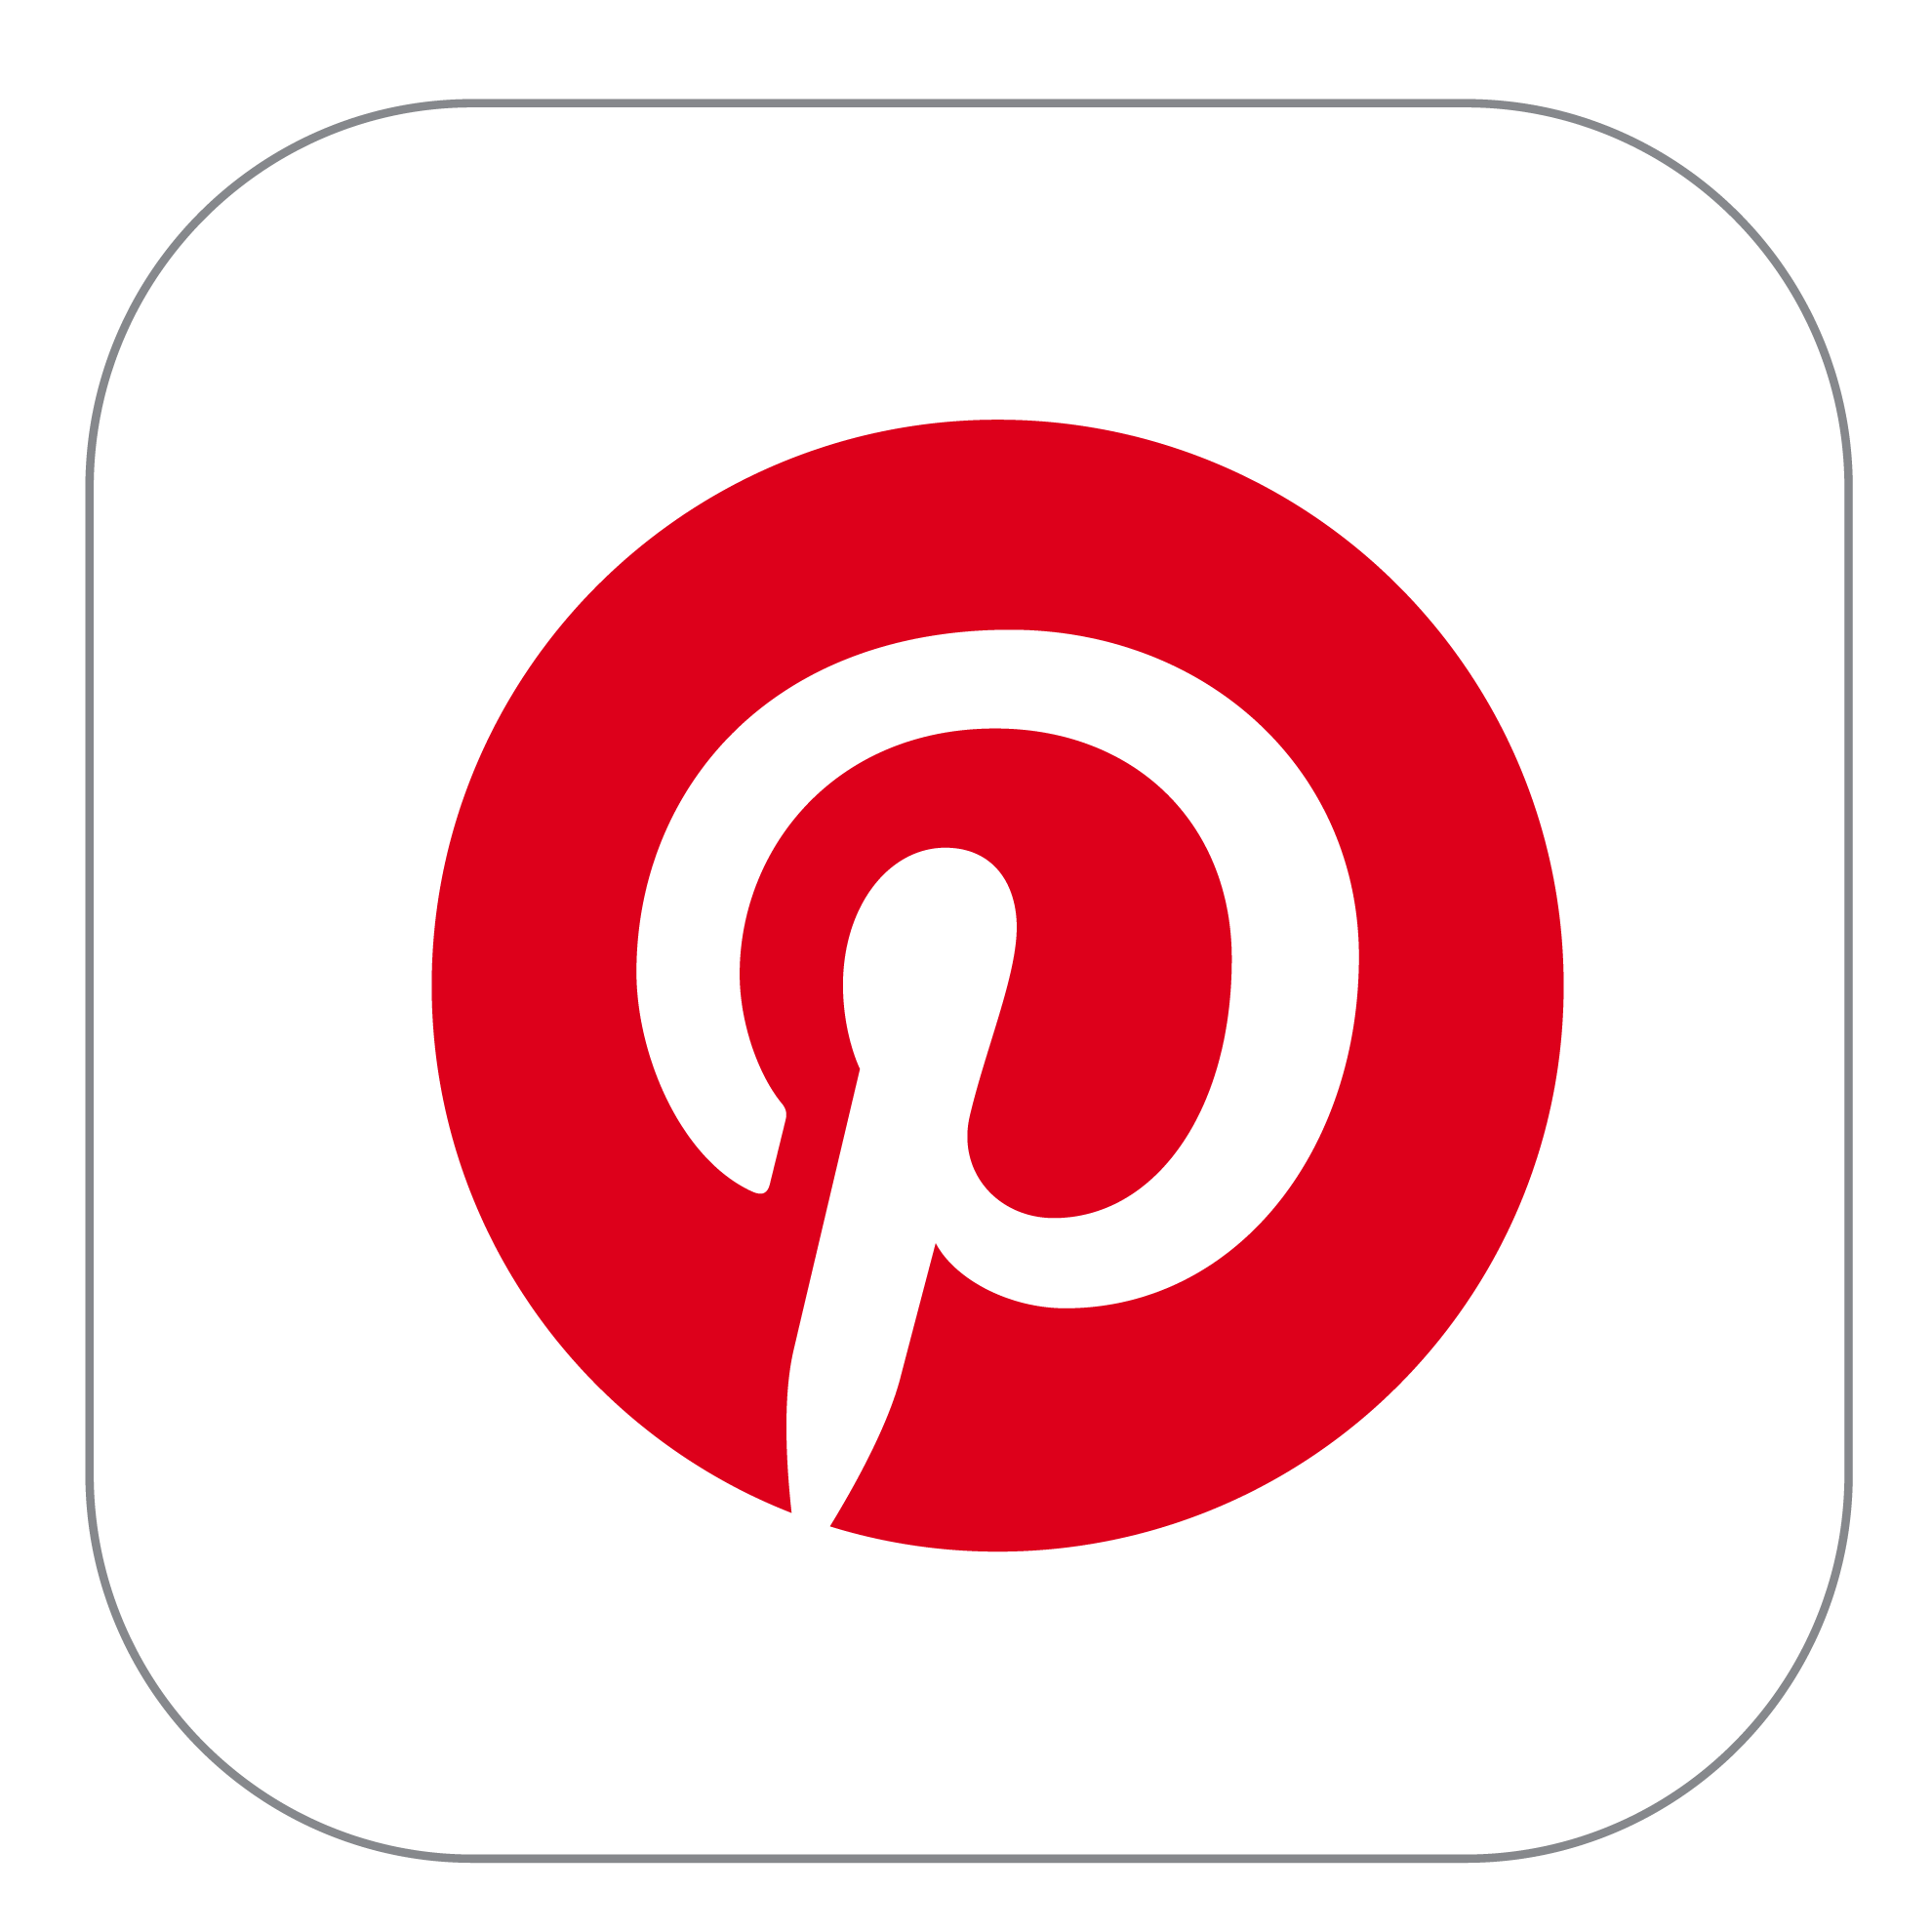 Logotipo Pinterest incluido en tu recarga de 20 pesos